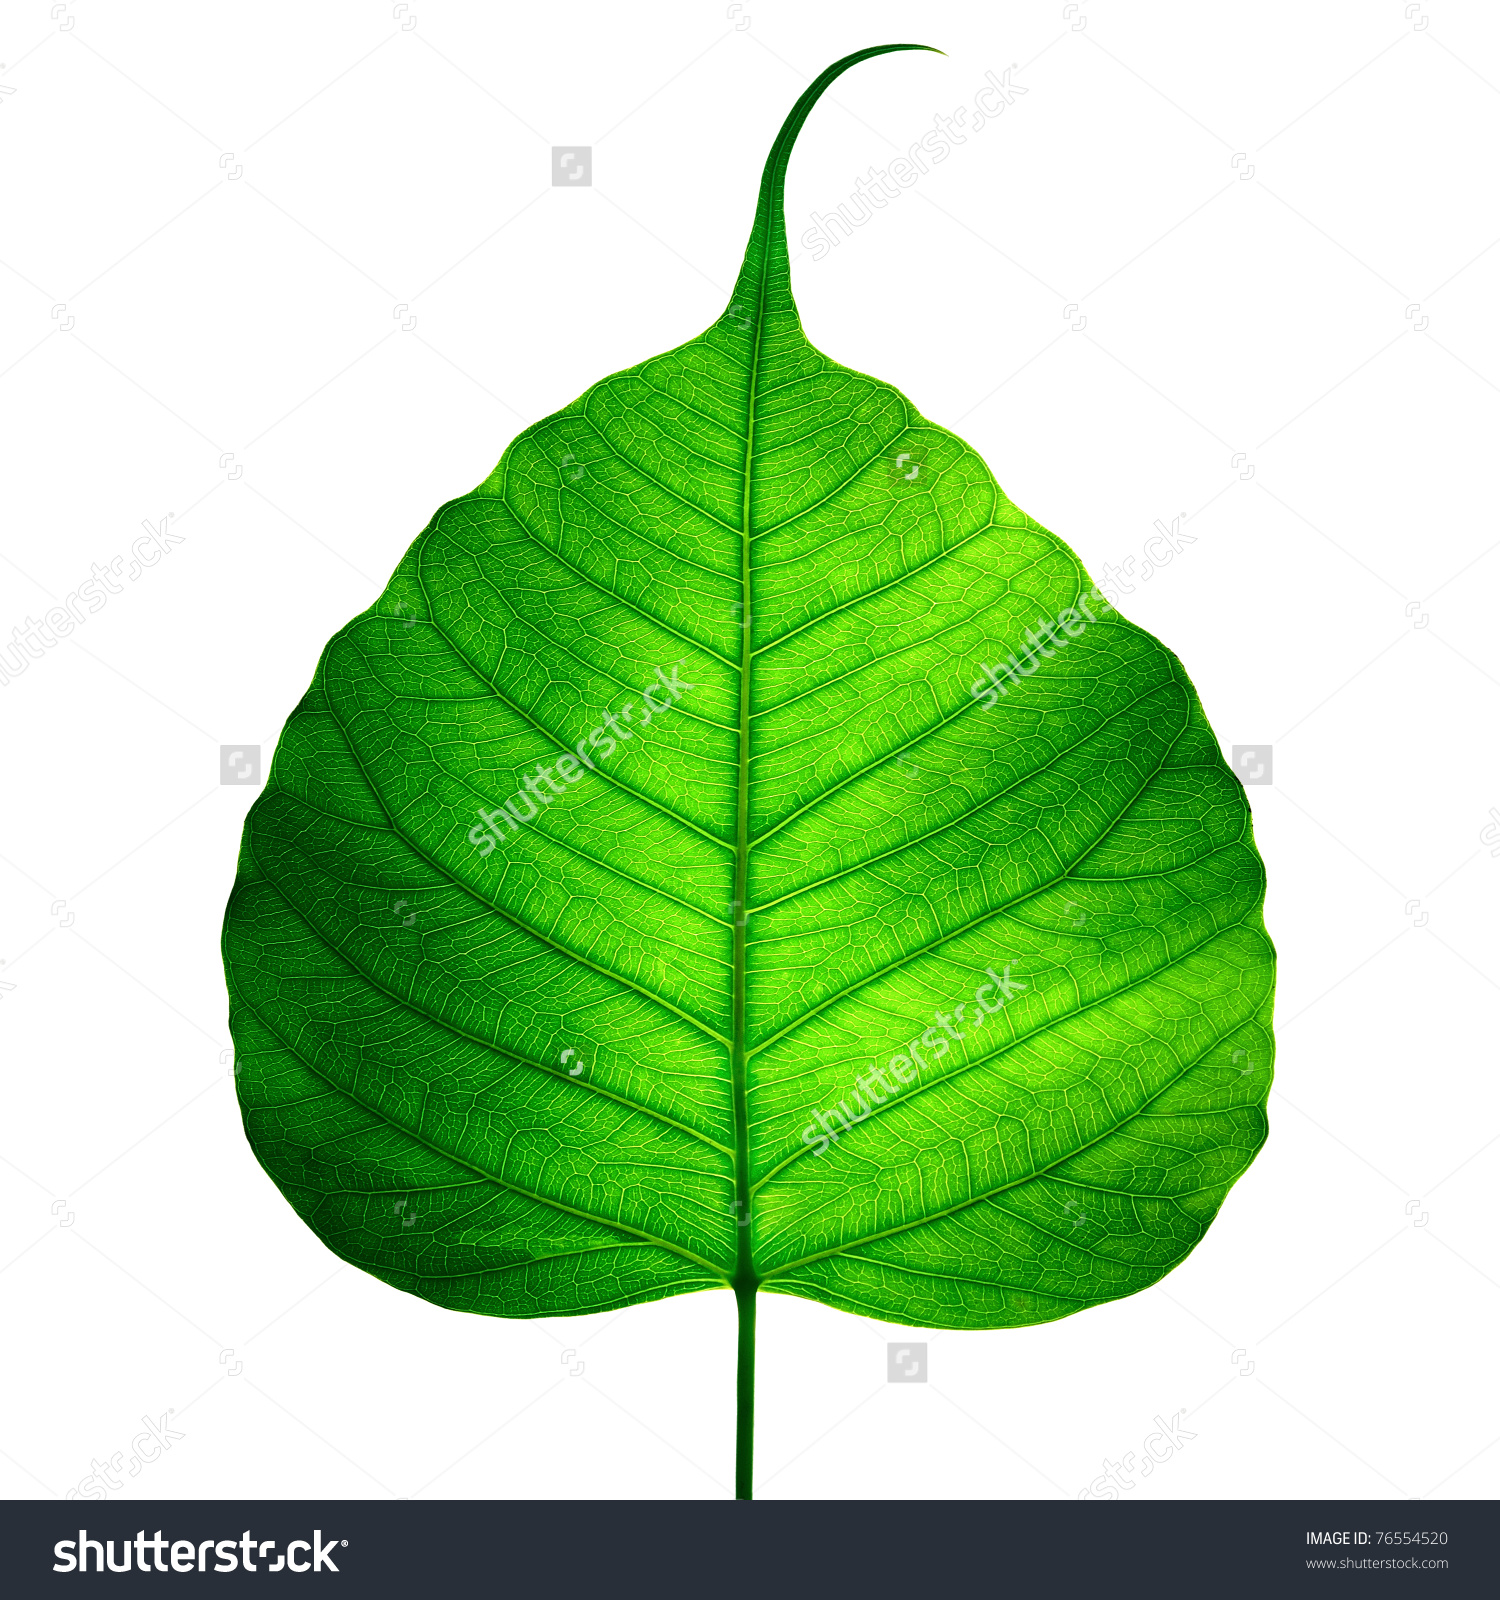 Green Leaf Vein Bodhi Leaf On Stock Photo 76554520.